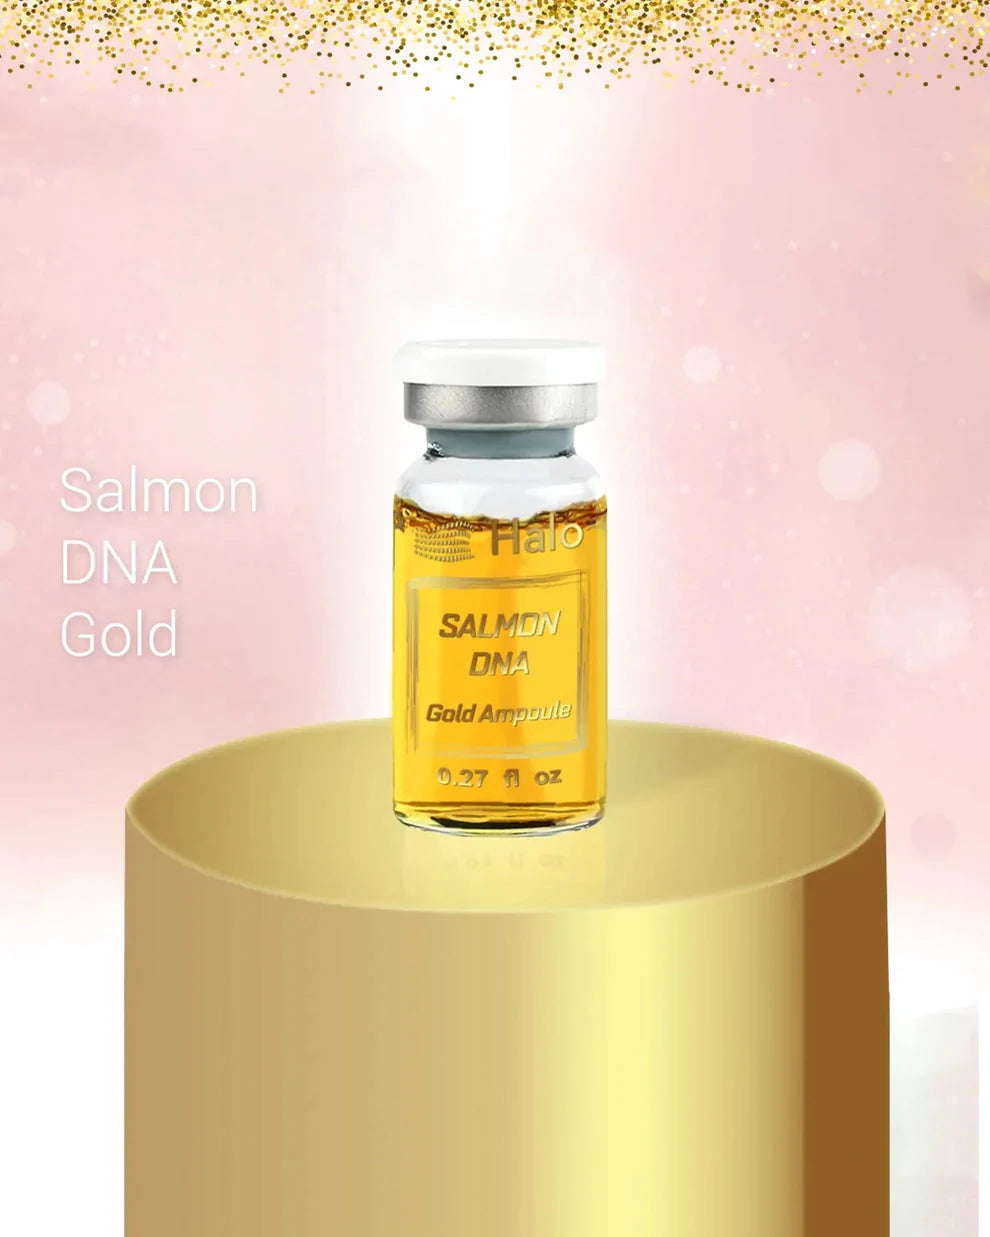 Salmon DNA Gold